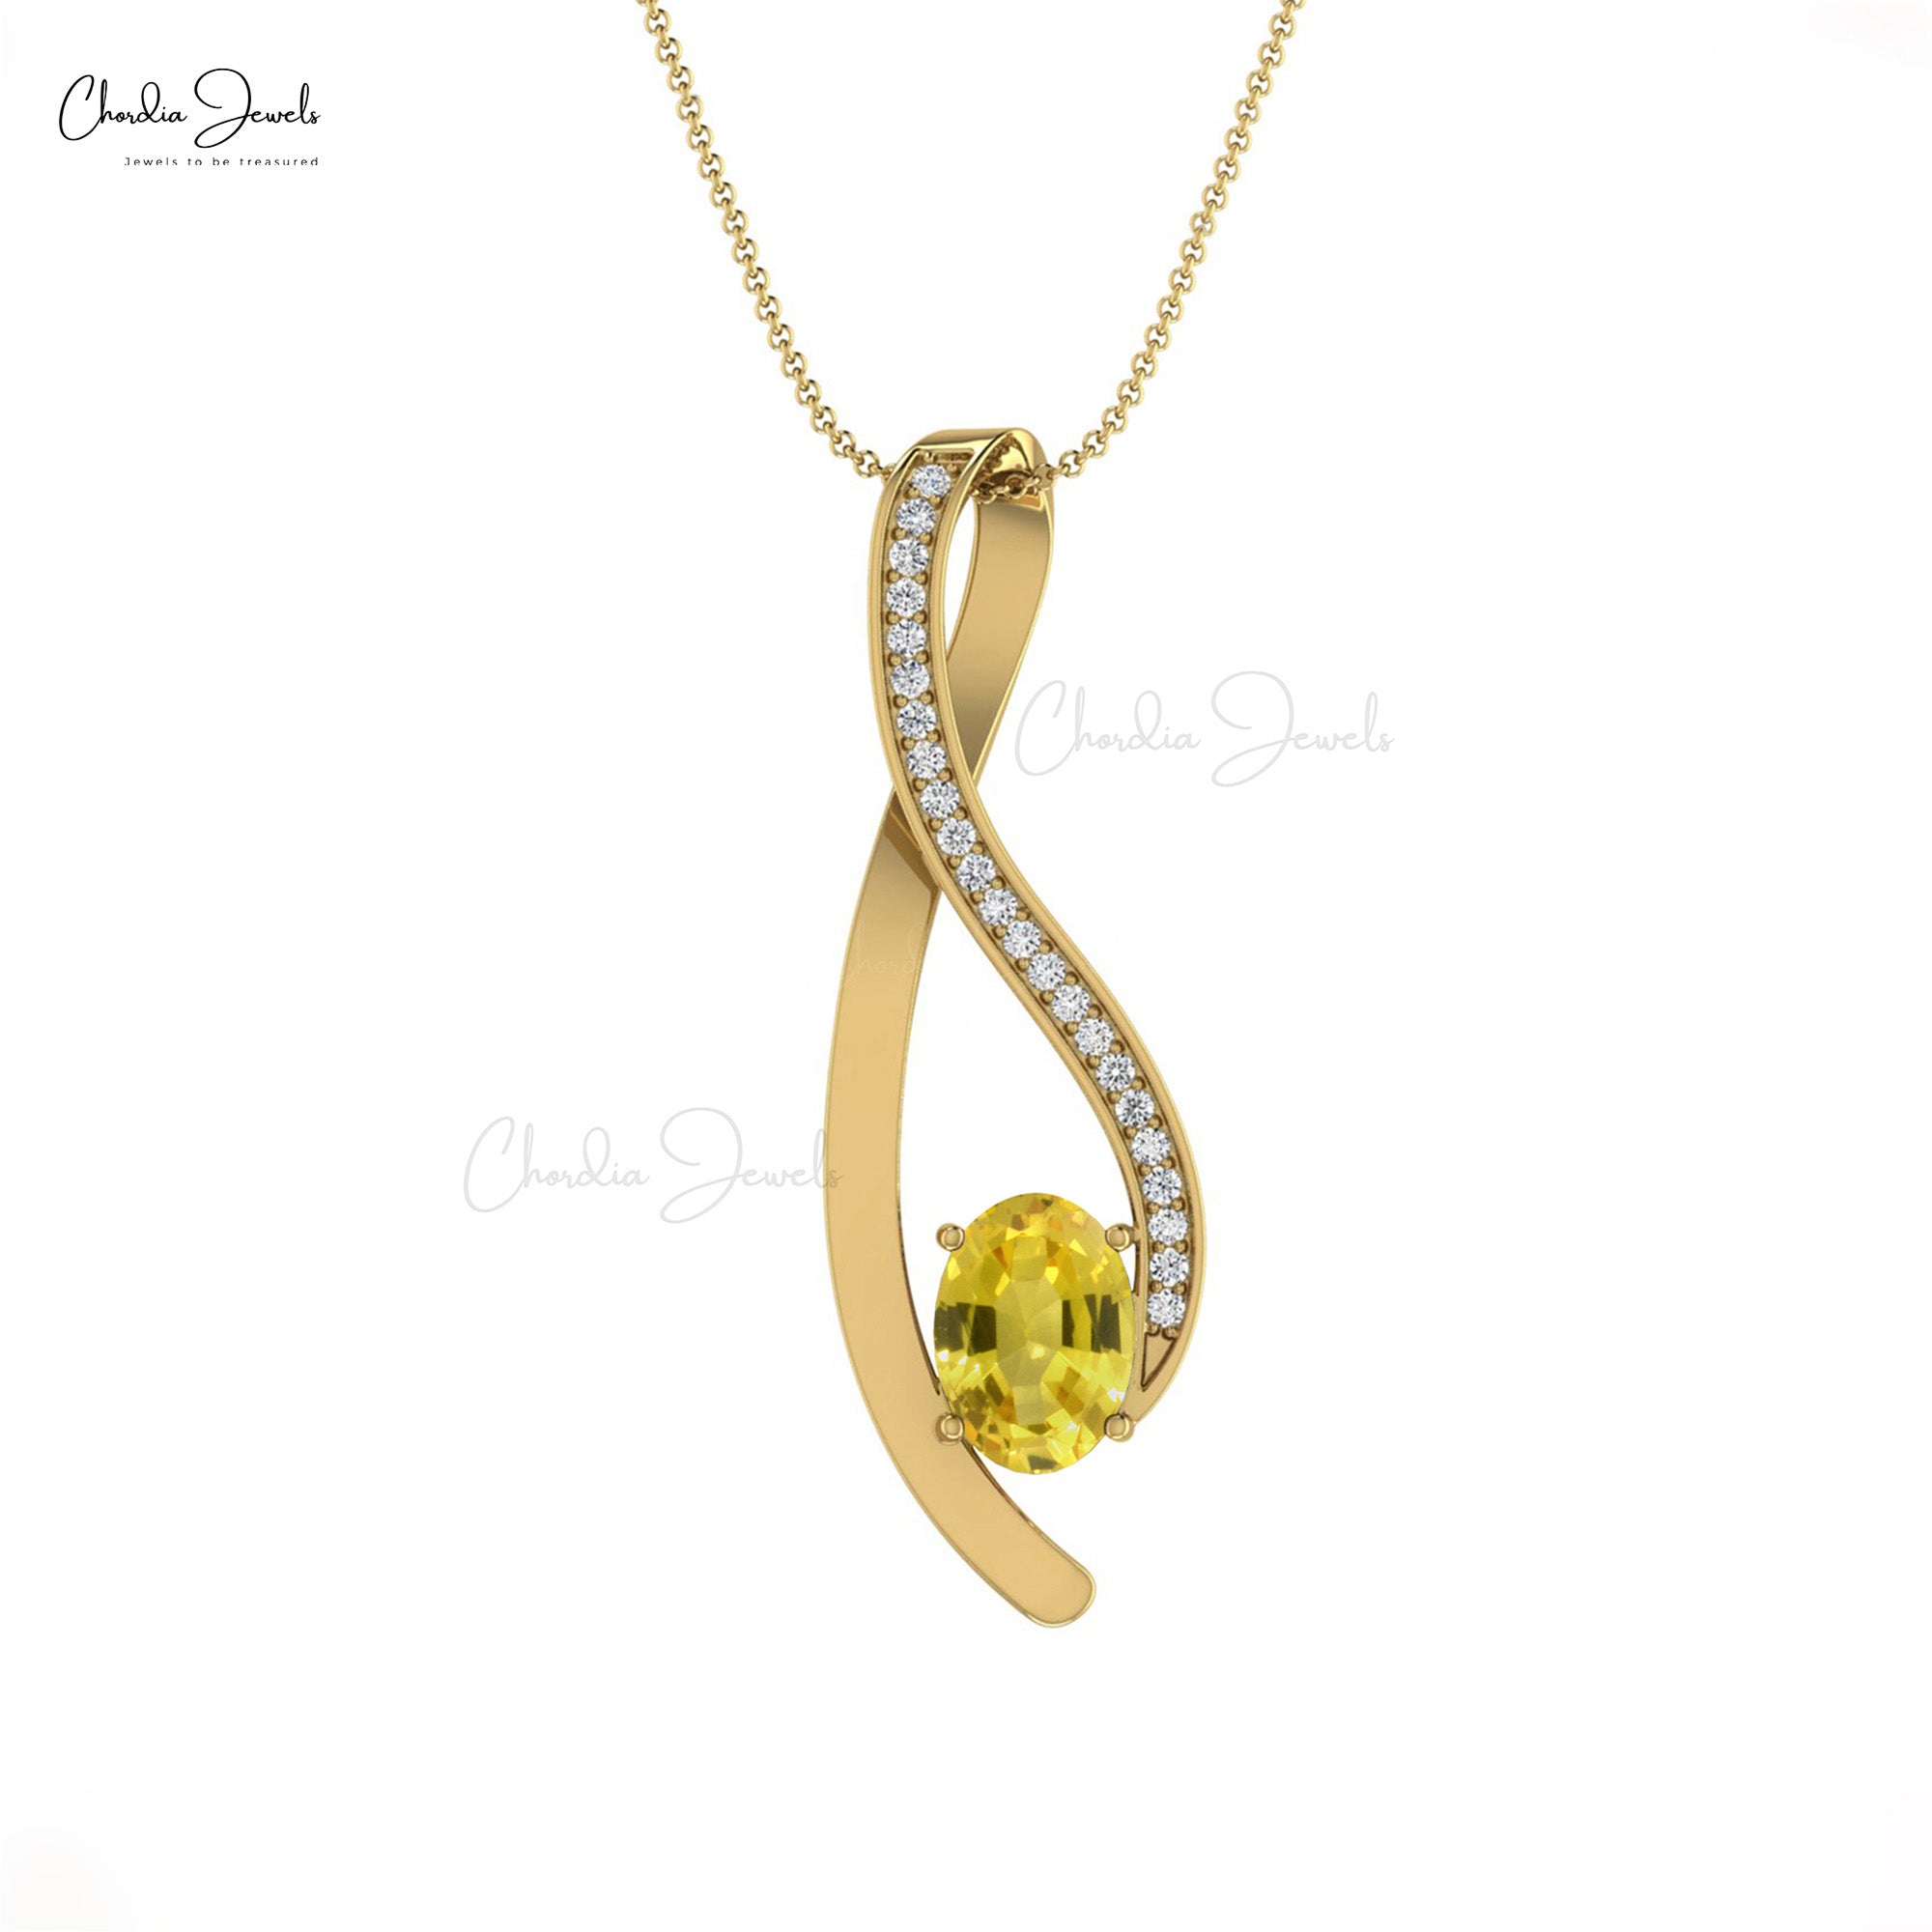 Messika White Gold Diamond Necklace - MOVE ROMANE PENDANT -